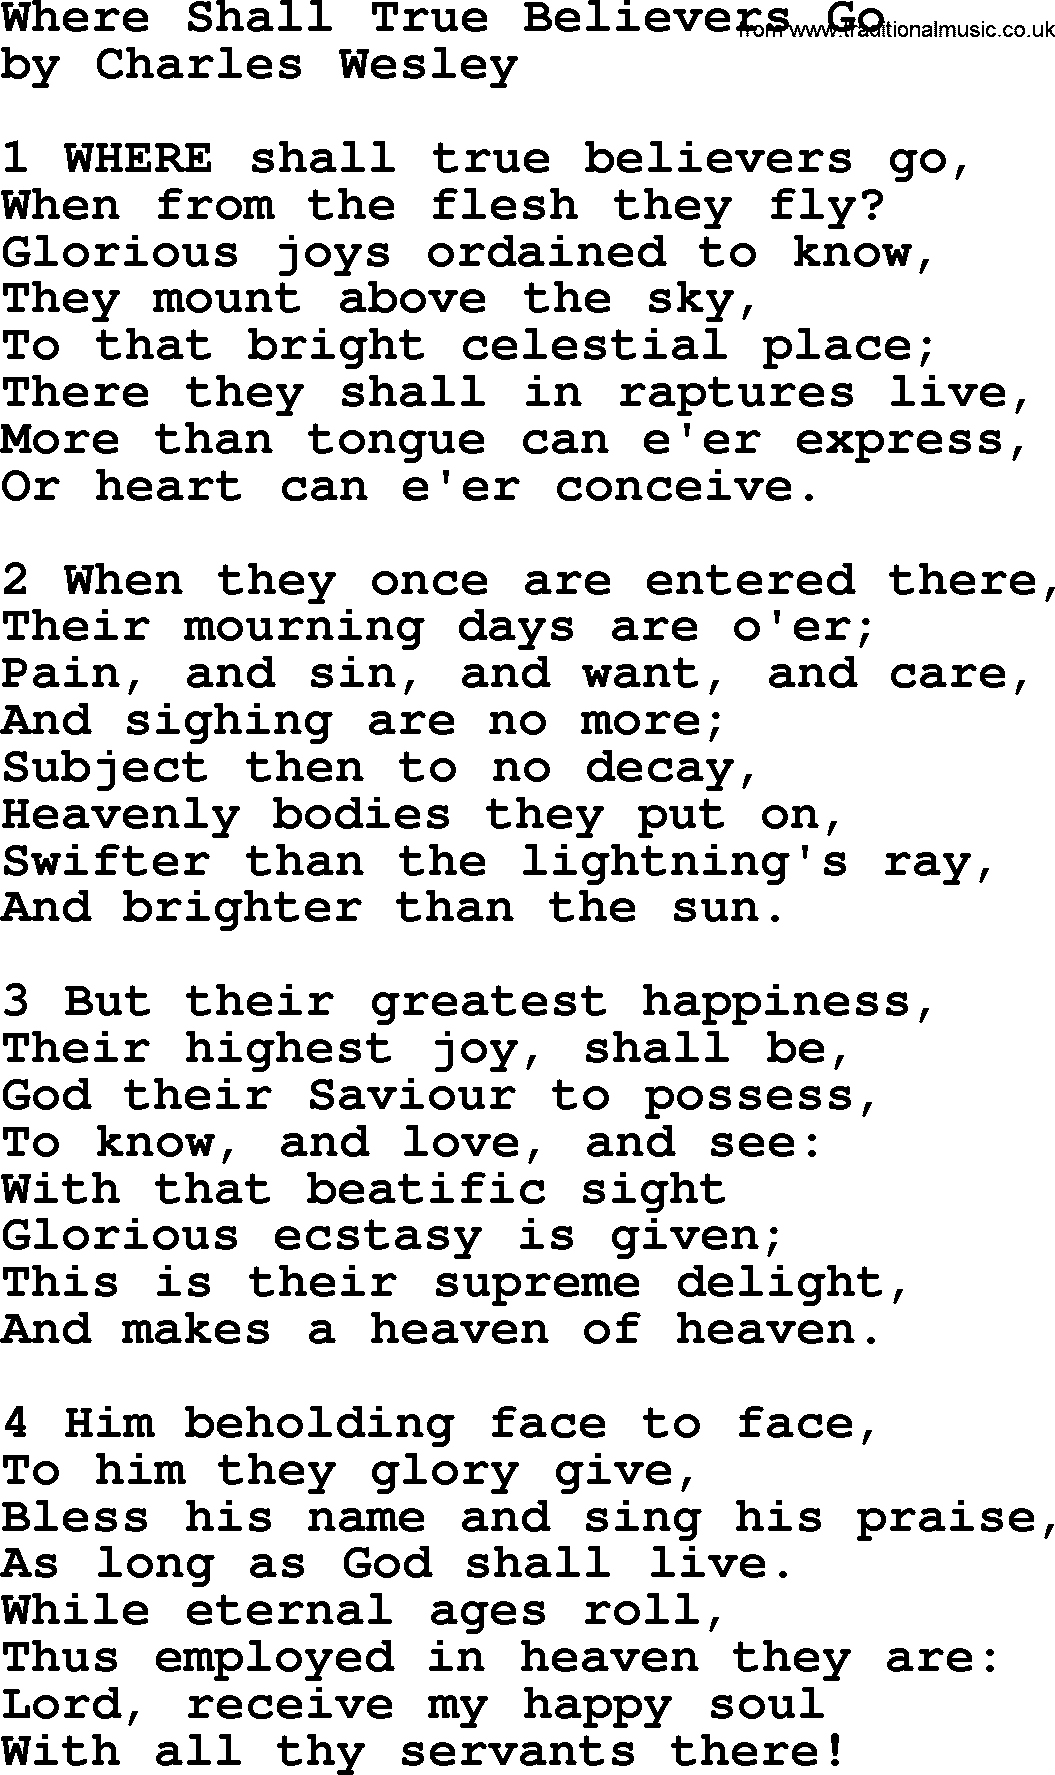 Charles Wesley hymn: Where Shall True Believers Go, lyrics